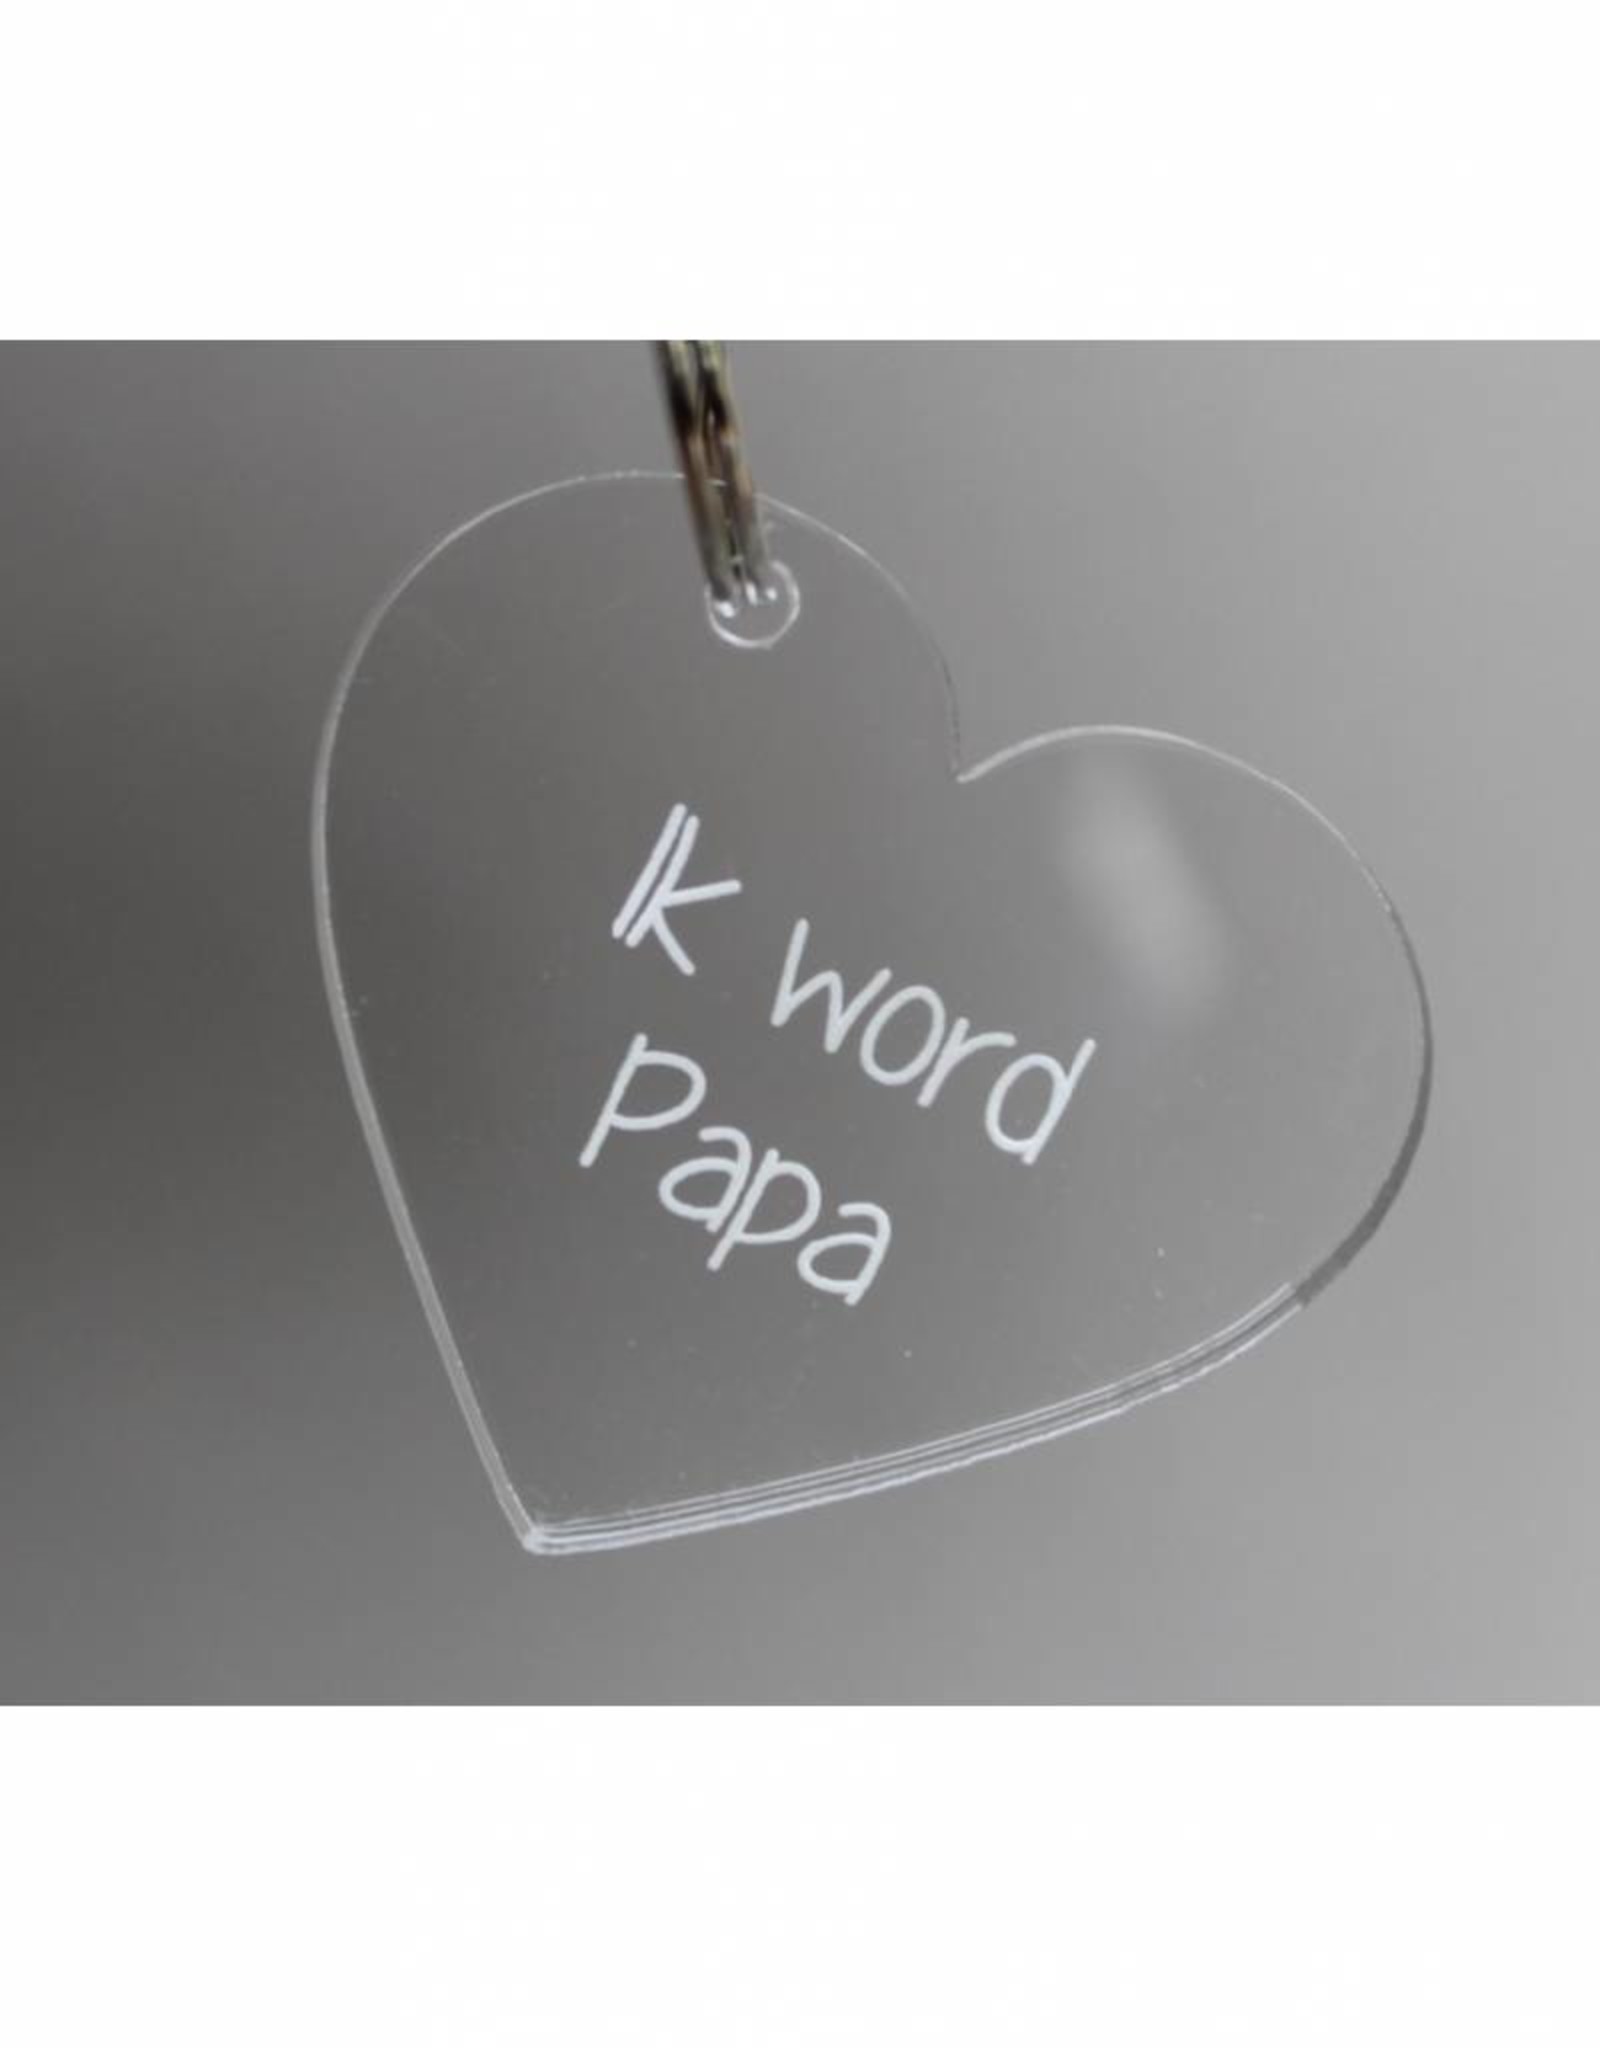 Sleutelhanger hartje "Ik word Papa"